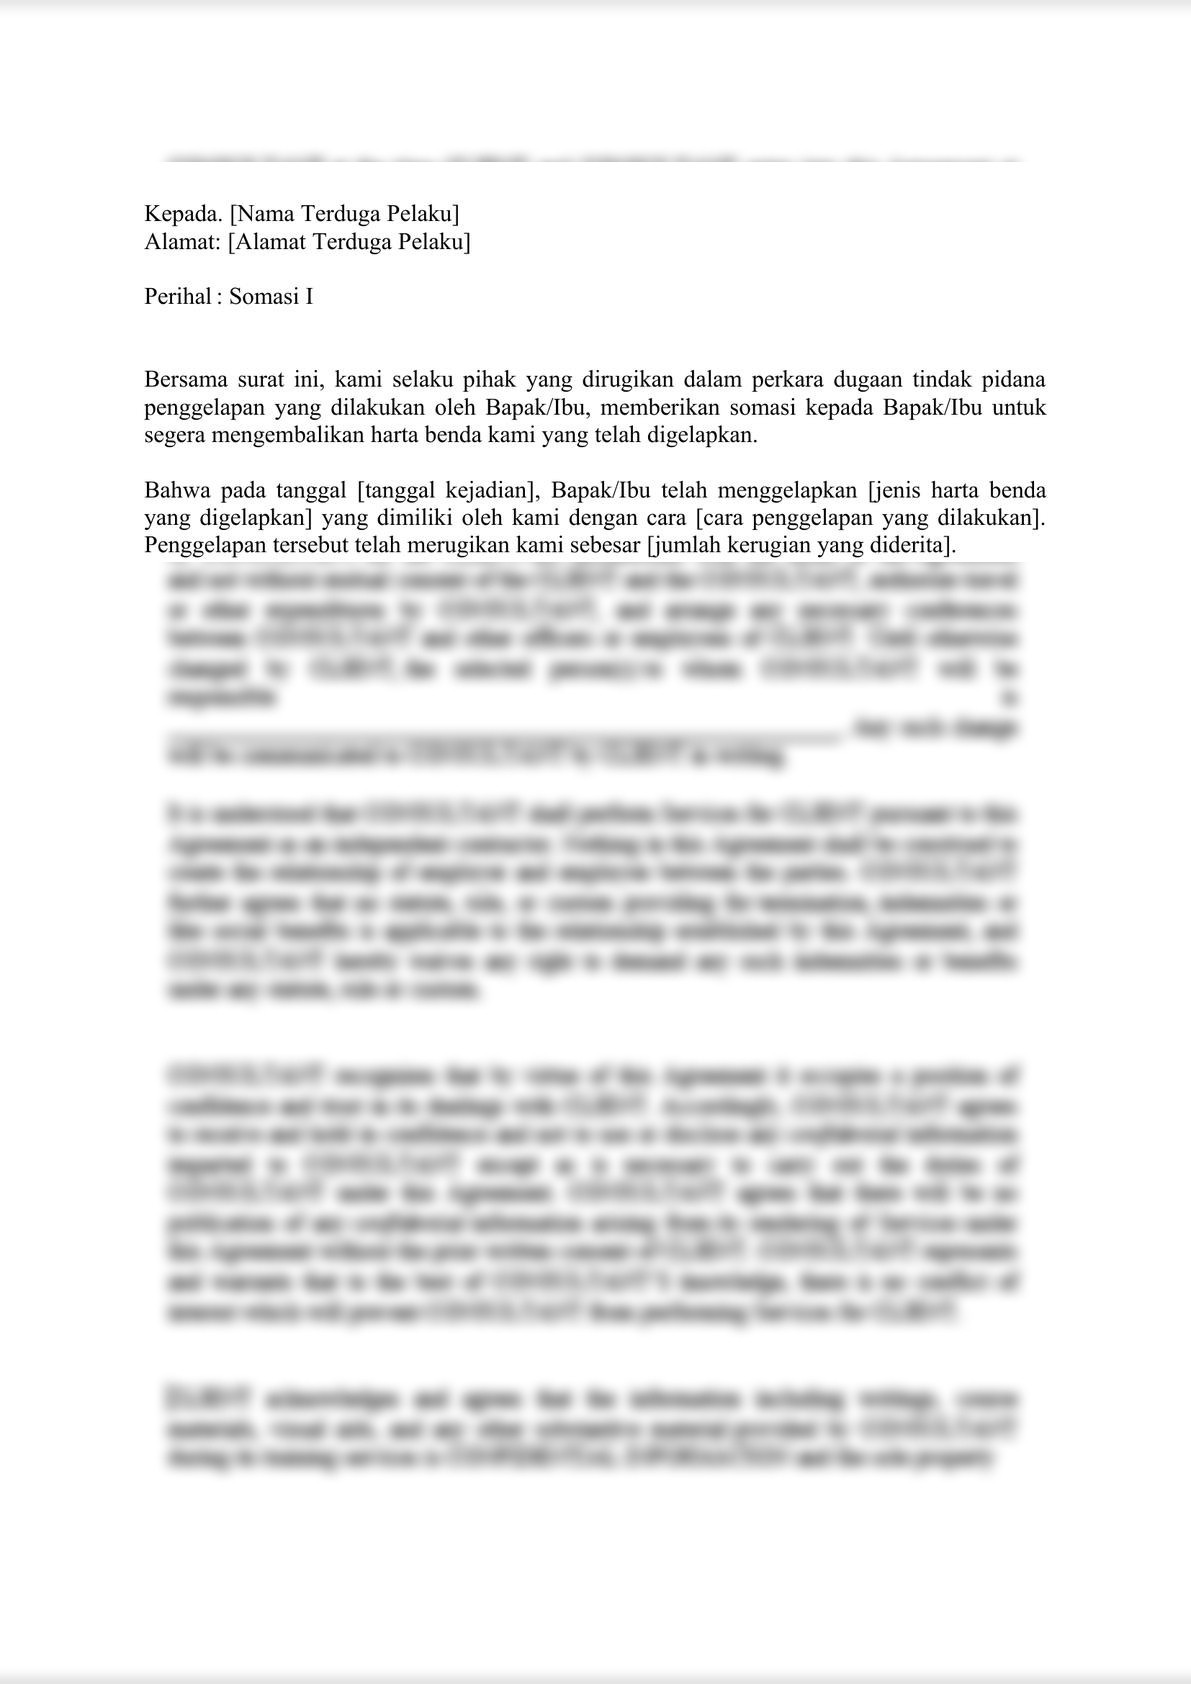 somasi peringatan summon for indonesian embezzlement case-0